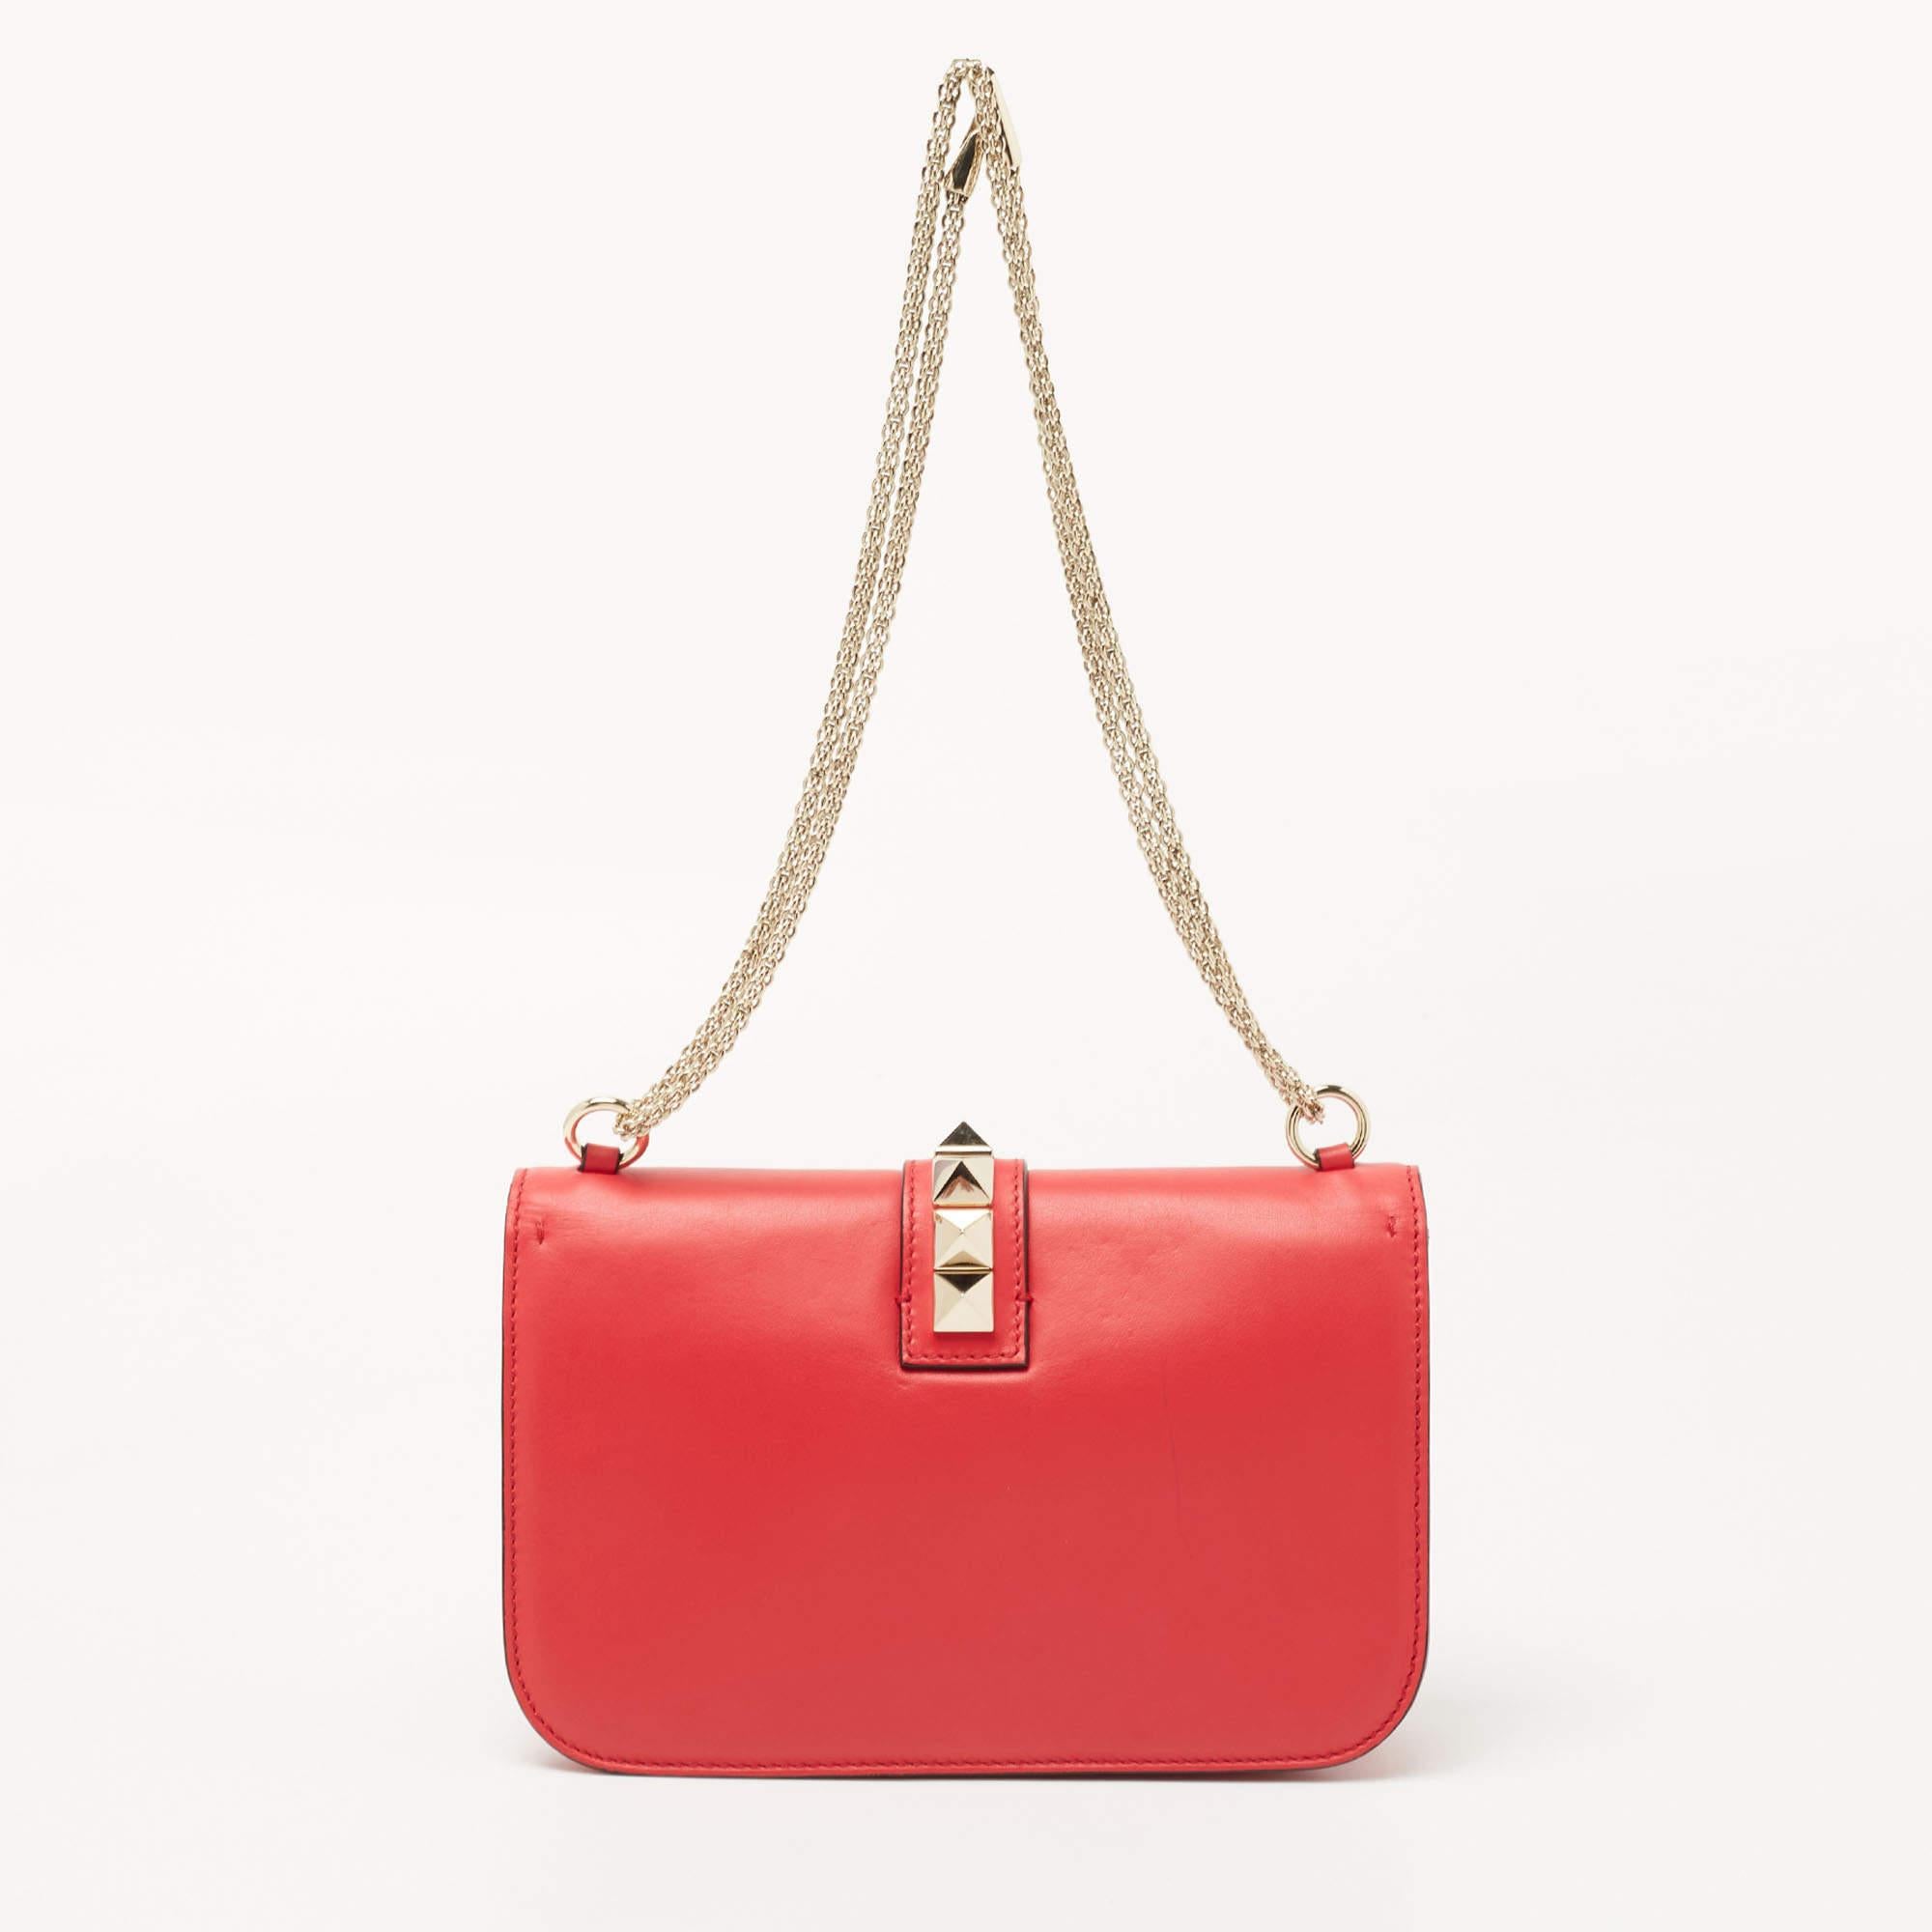 Valentino Coral Red Leather Medium Glam Lock Chain Shoulder Bag In Good Condition For Sale In Dubai, Al Qouz 2